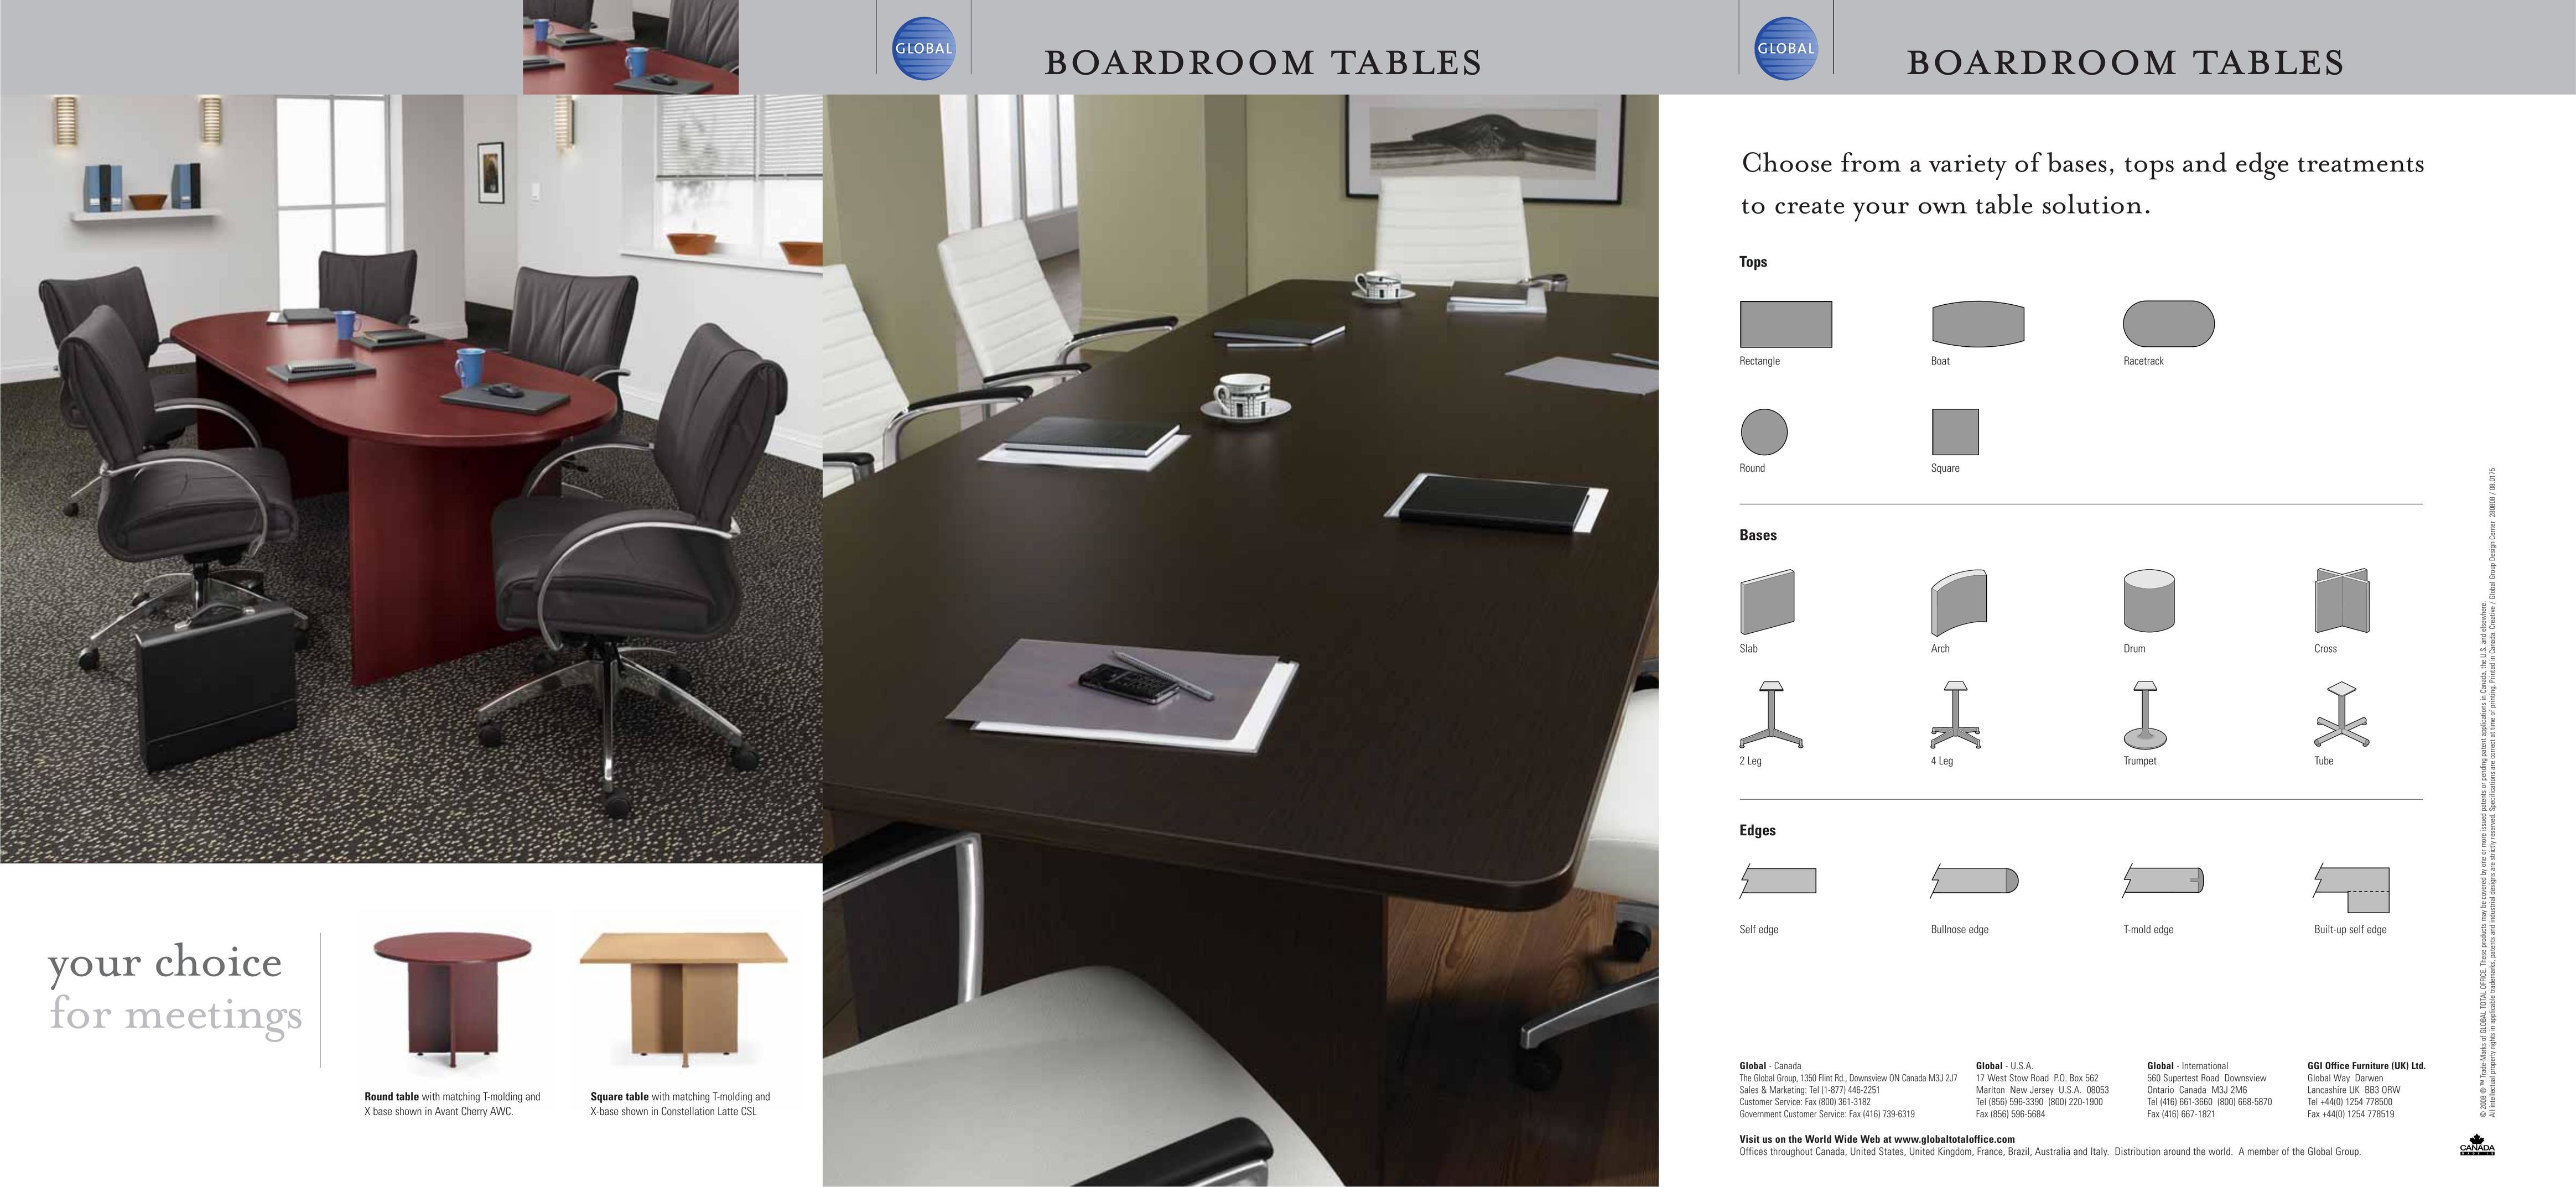 Global Upholstery Co. Boardroom Tables Indoor Furnishings User Manual